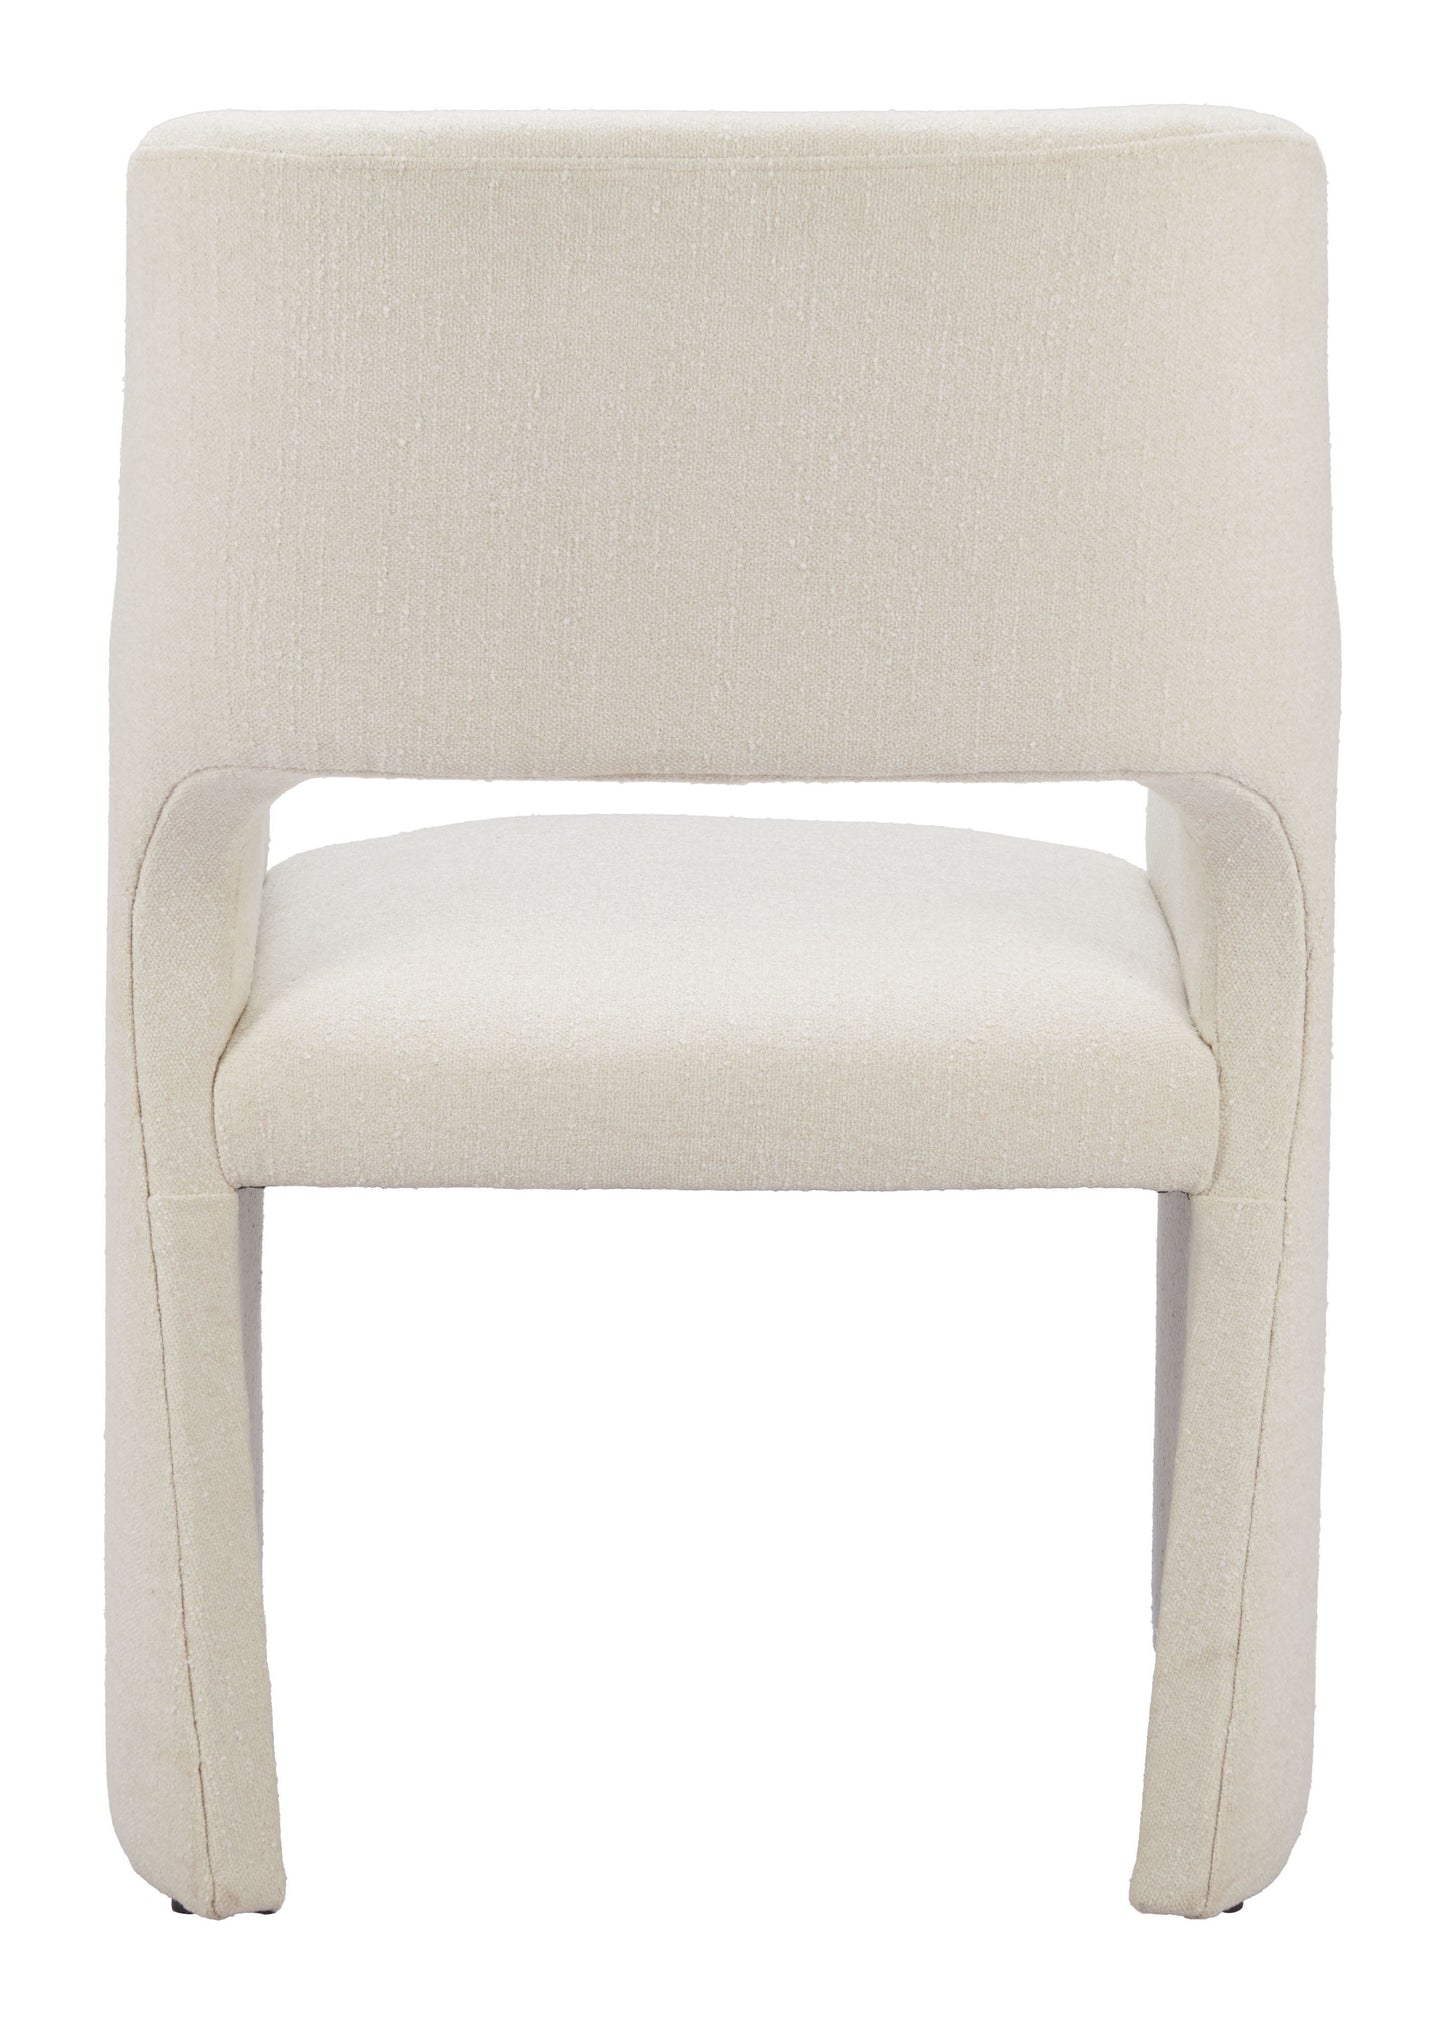 Minet - Dining Chair - Linen White